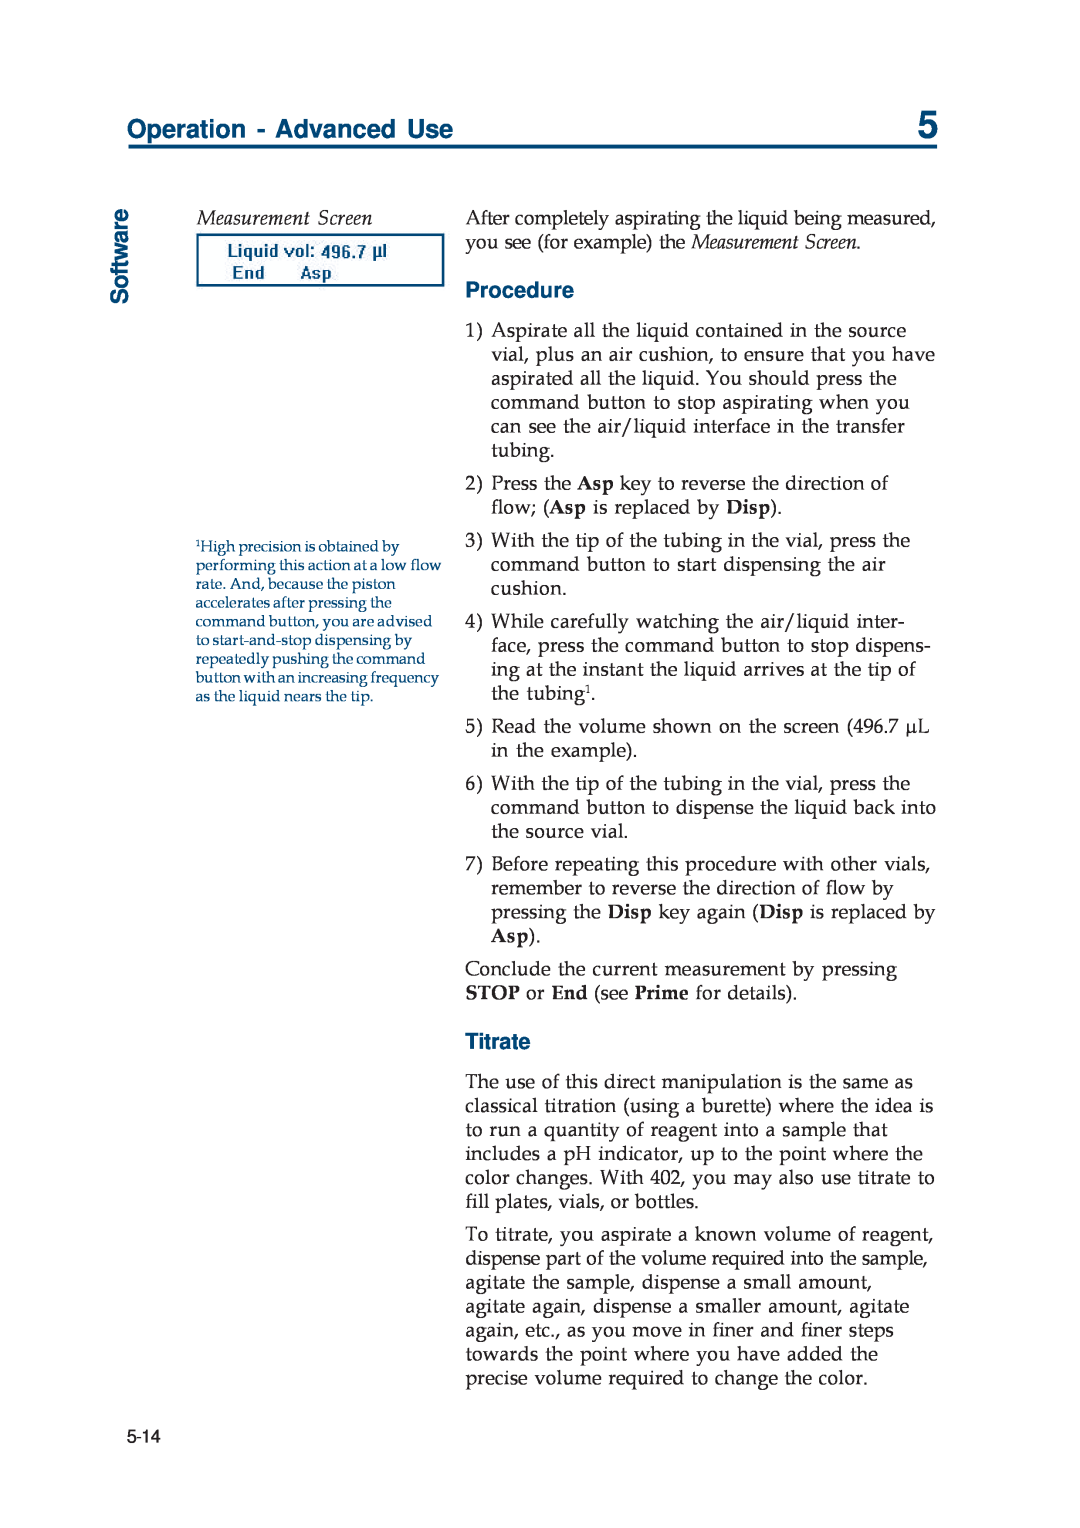 Gilson 402 manual Procedure, Titrate, Measurement Screen, Operation - Advanced Use, Software 